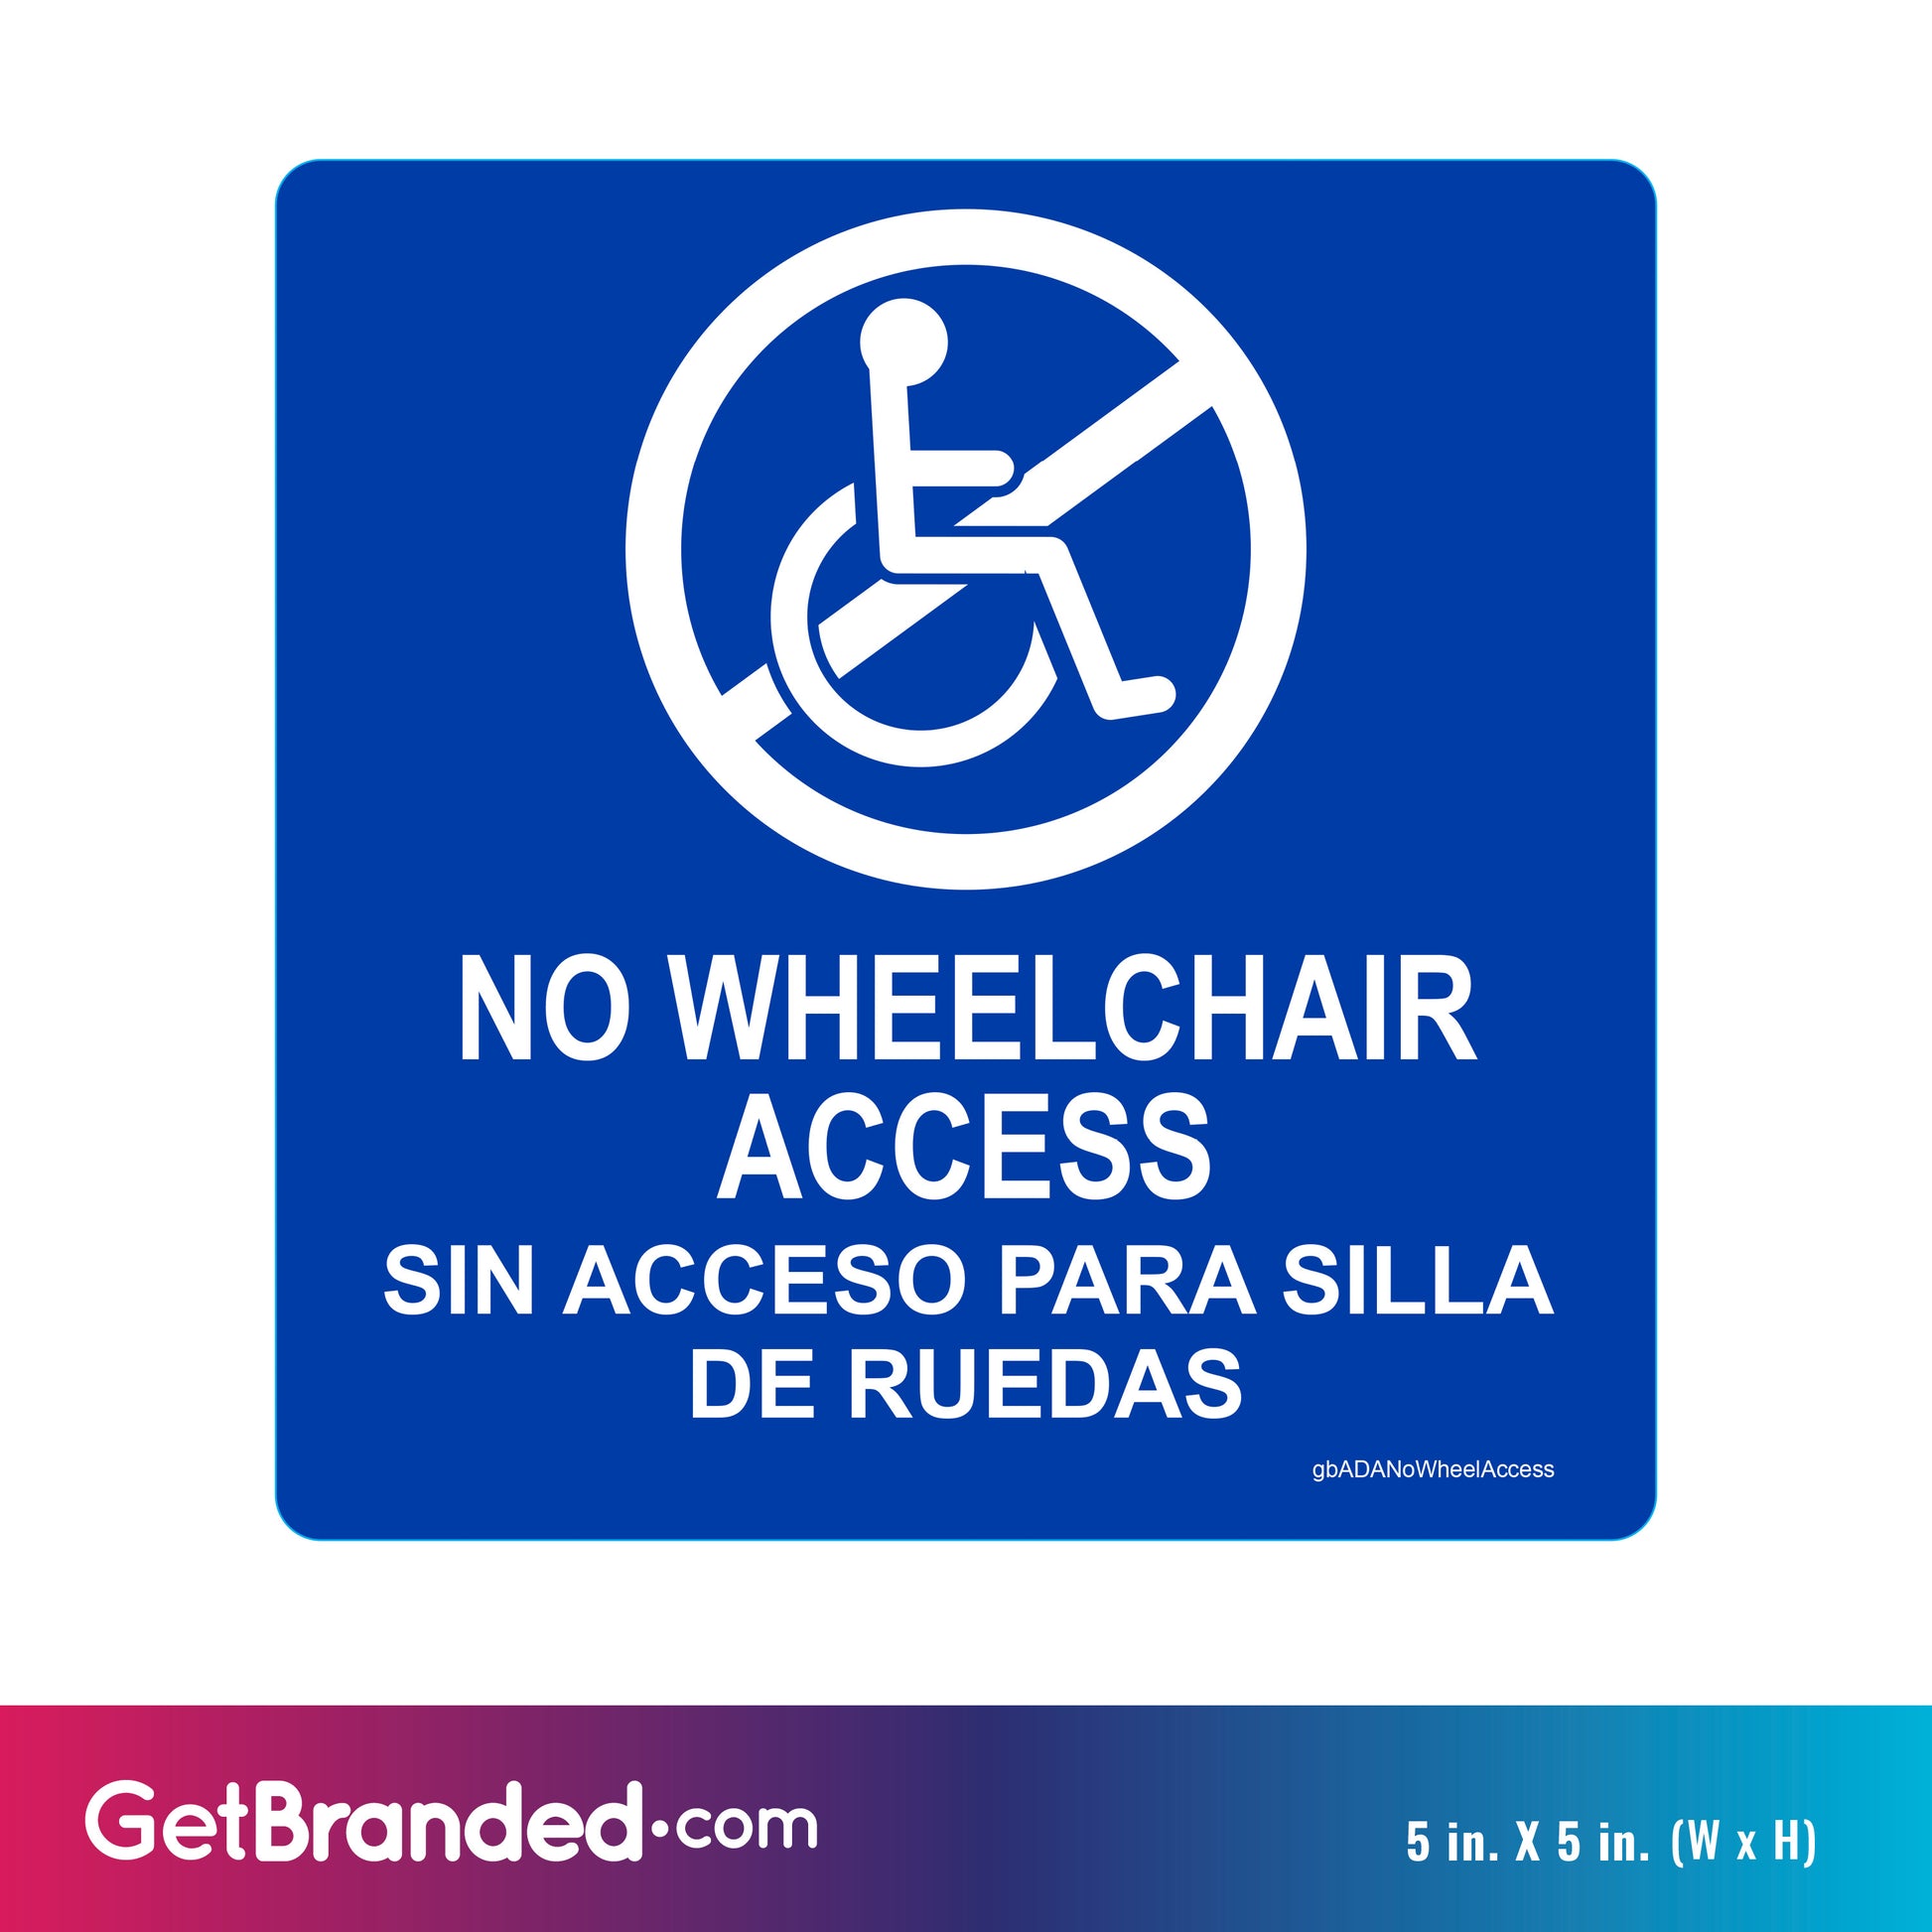 ADA No Wheelchair Access Decal size guide.